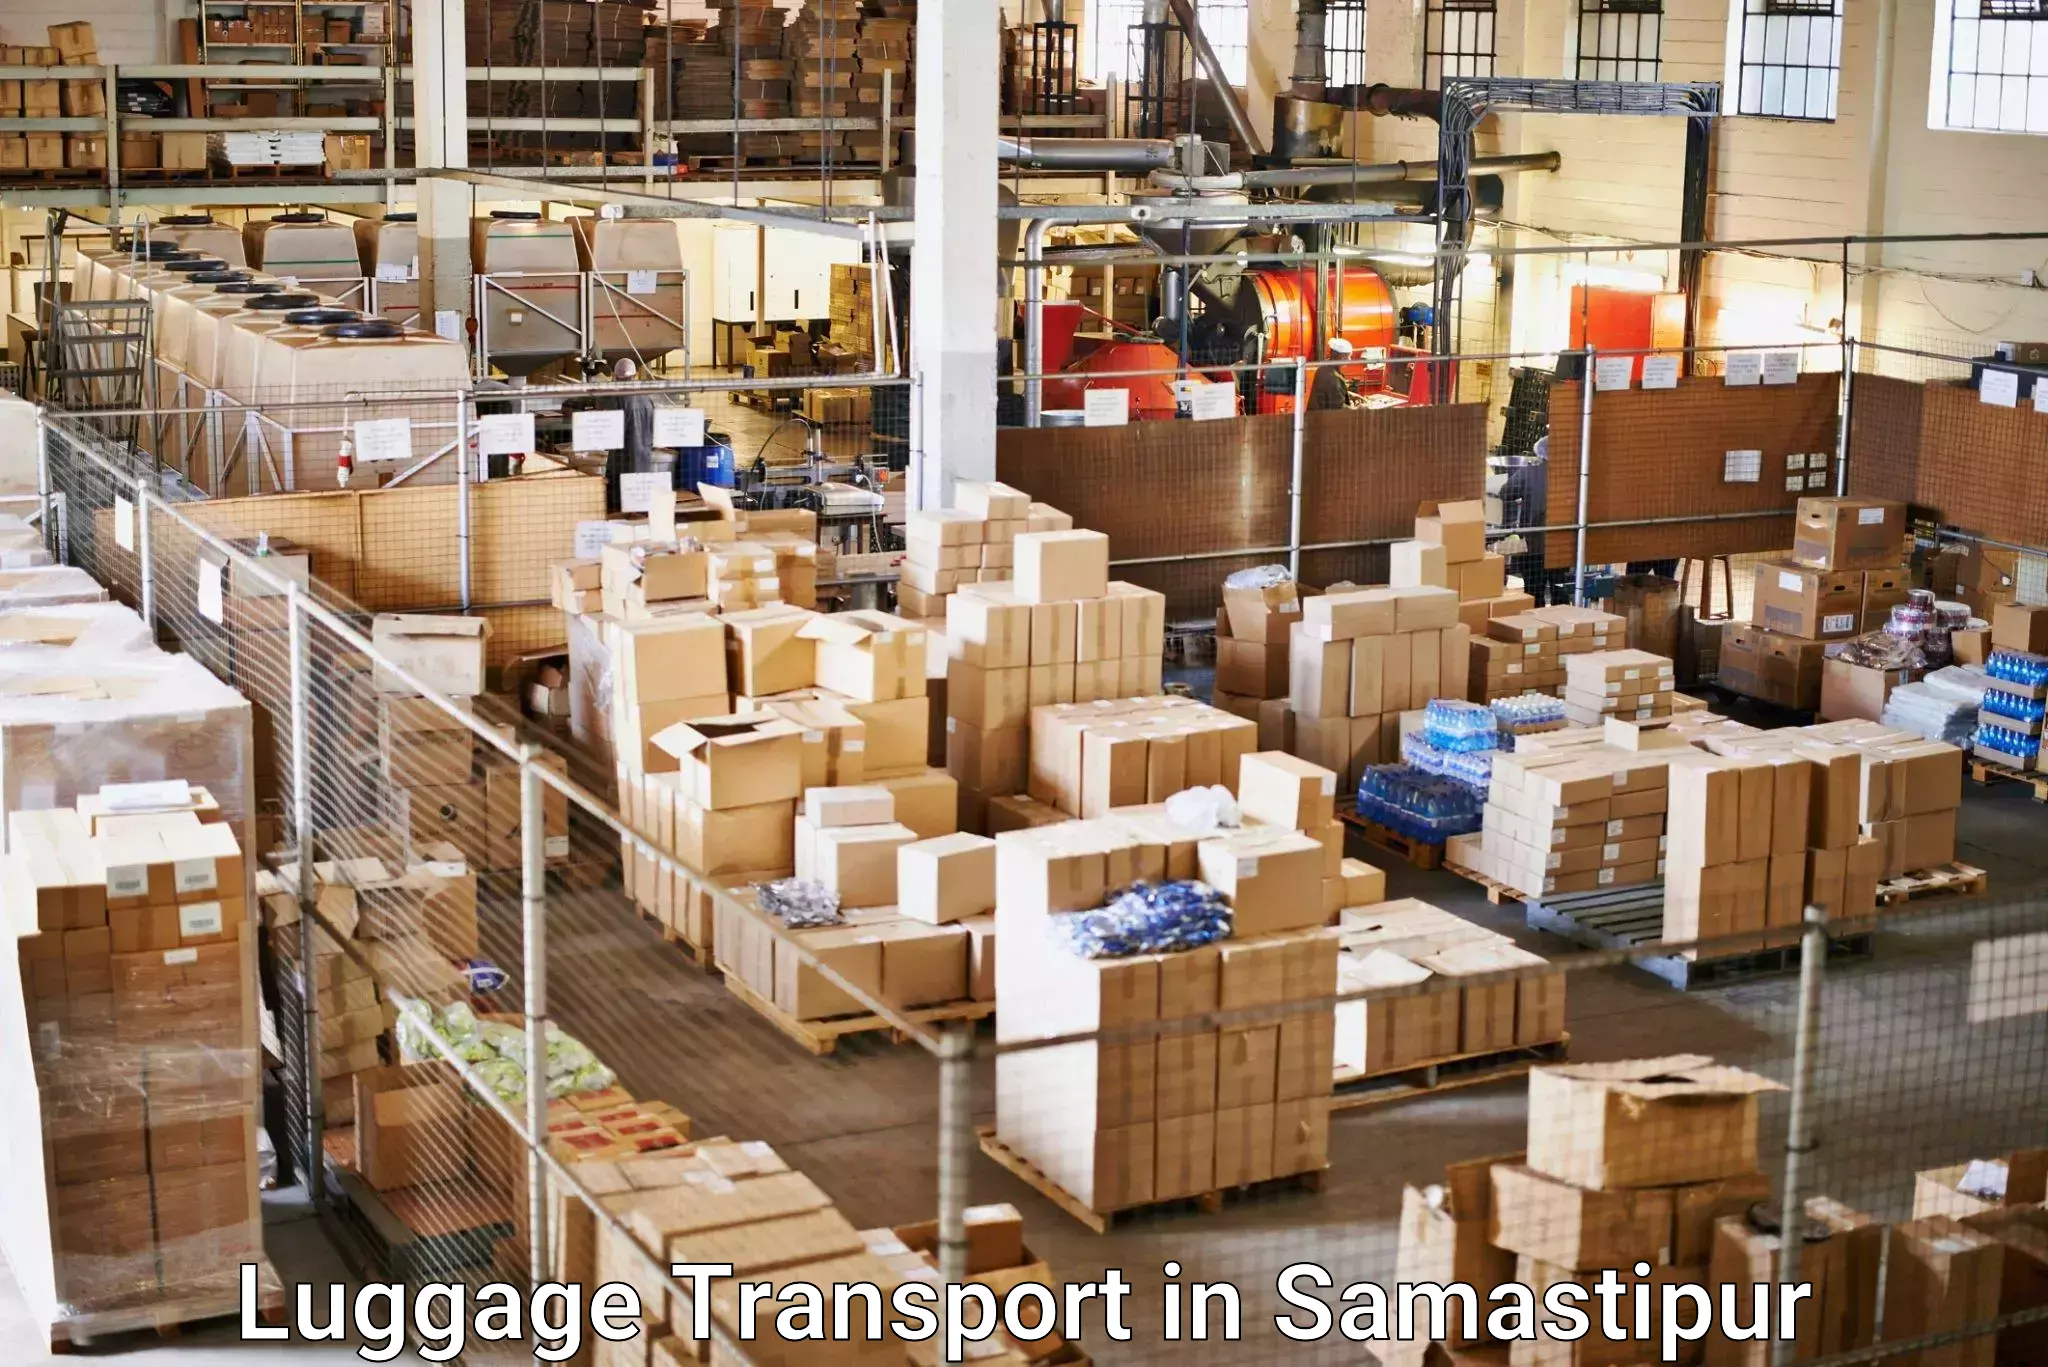 Luggage shipment processing in Samastipur